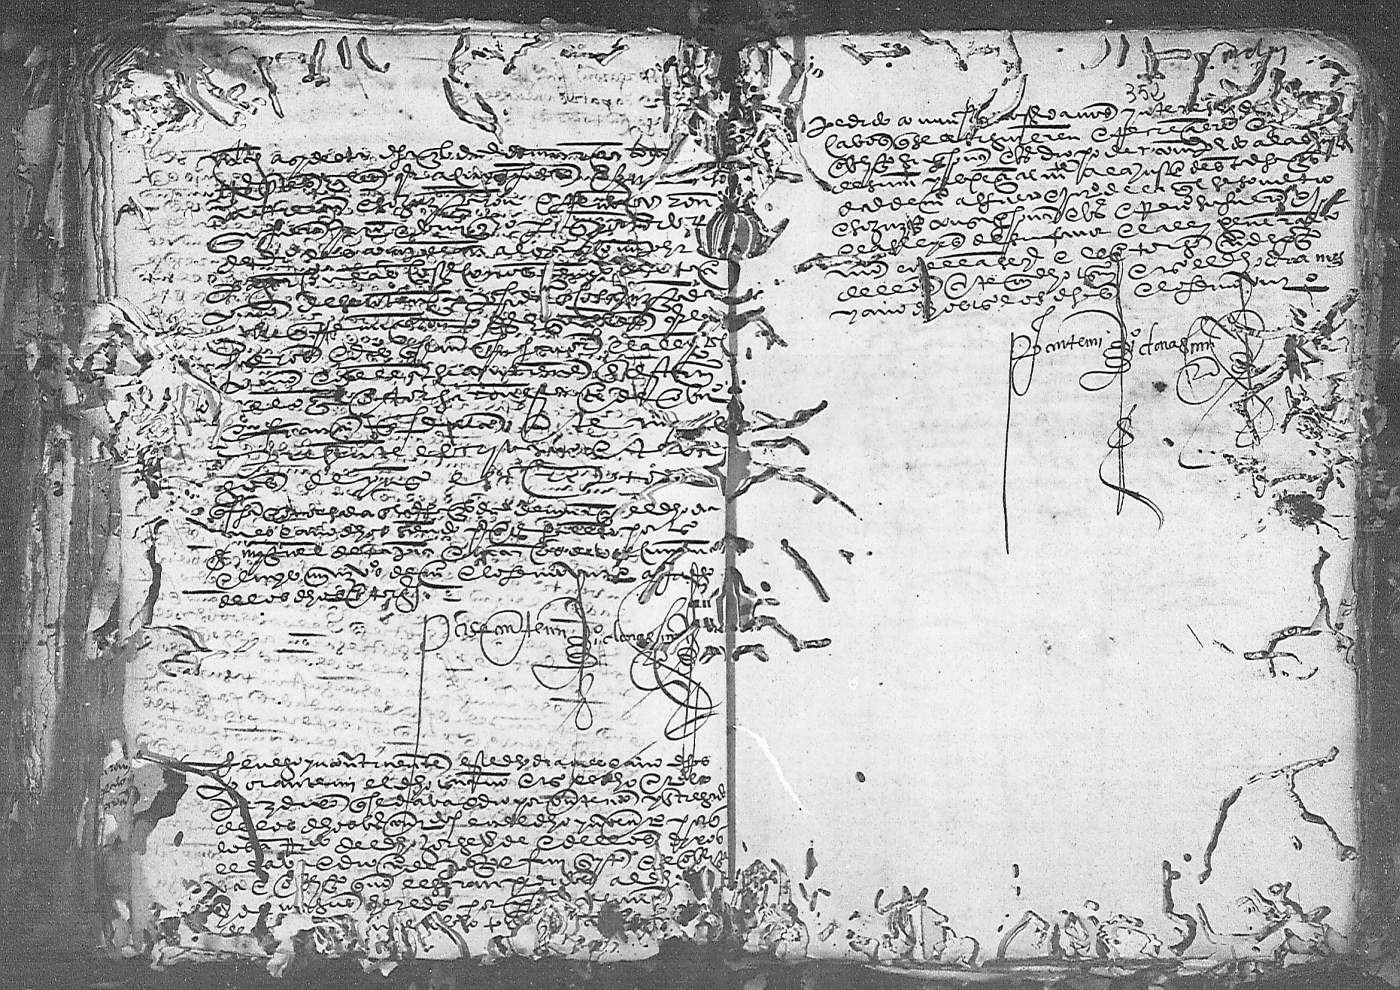 Registro de Diego de Bascuñana, Murcia de 1558-1559.